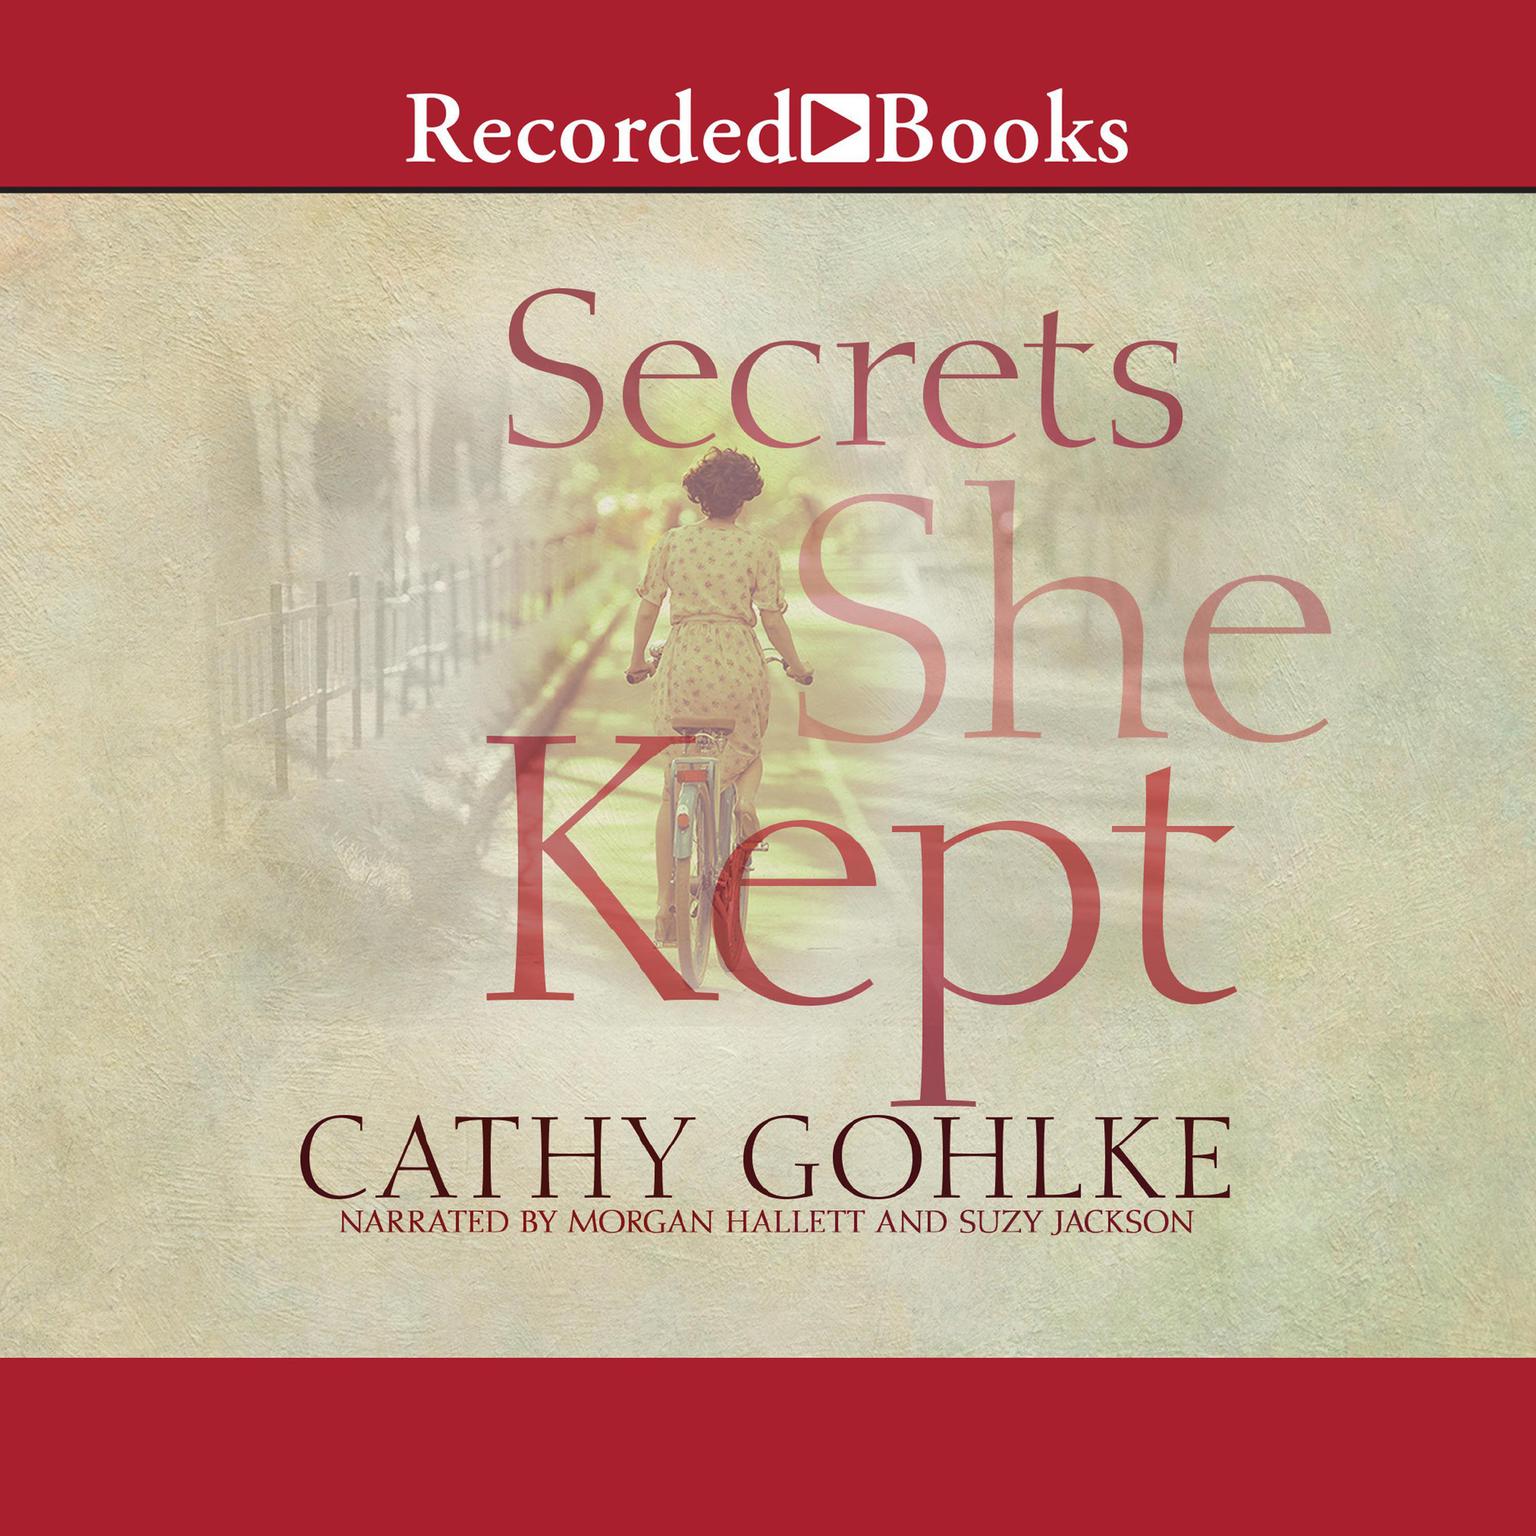 Secrets She Kept Audiobook, by Cathy Gohlke